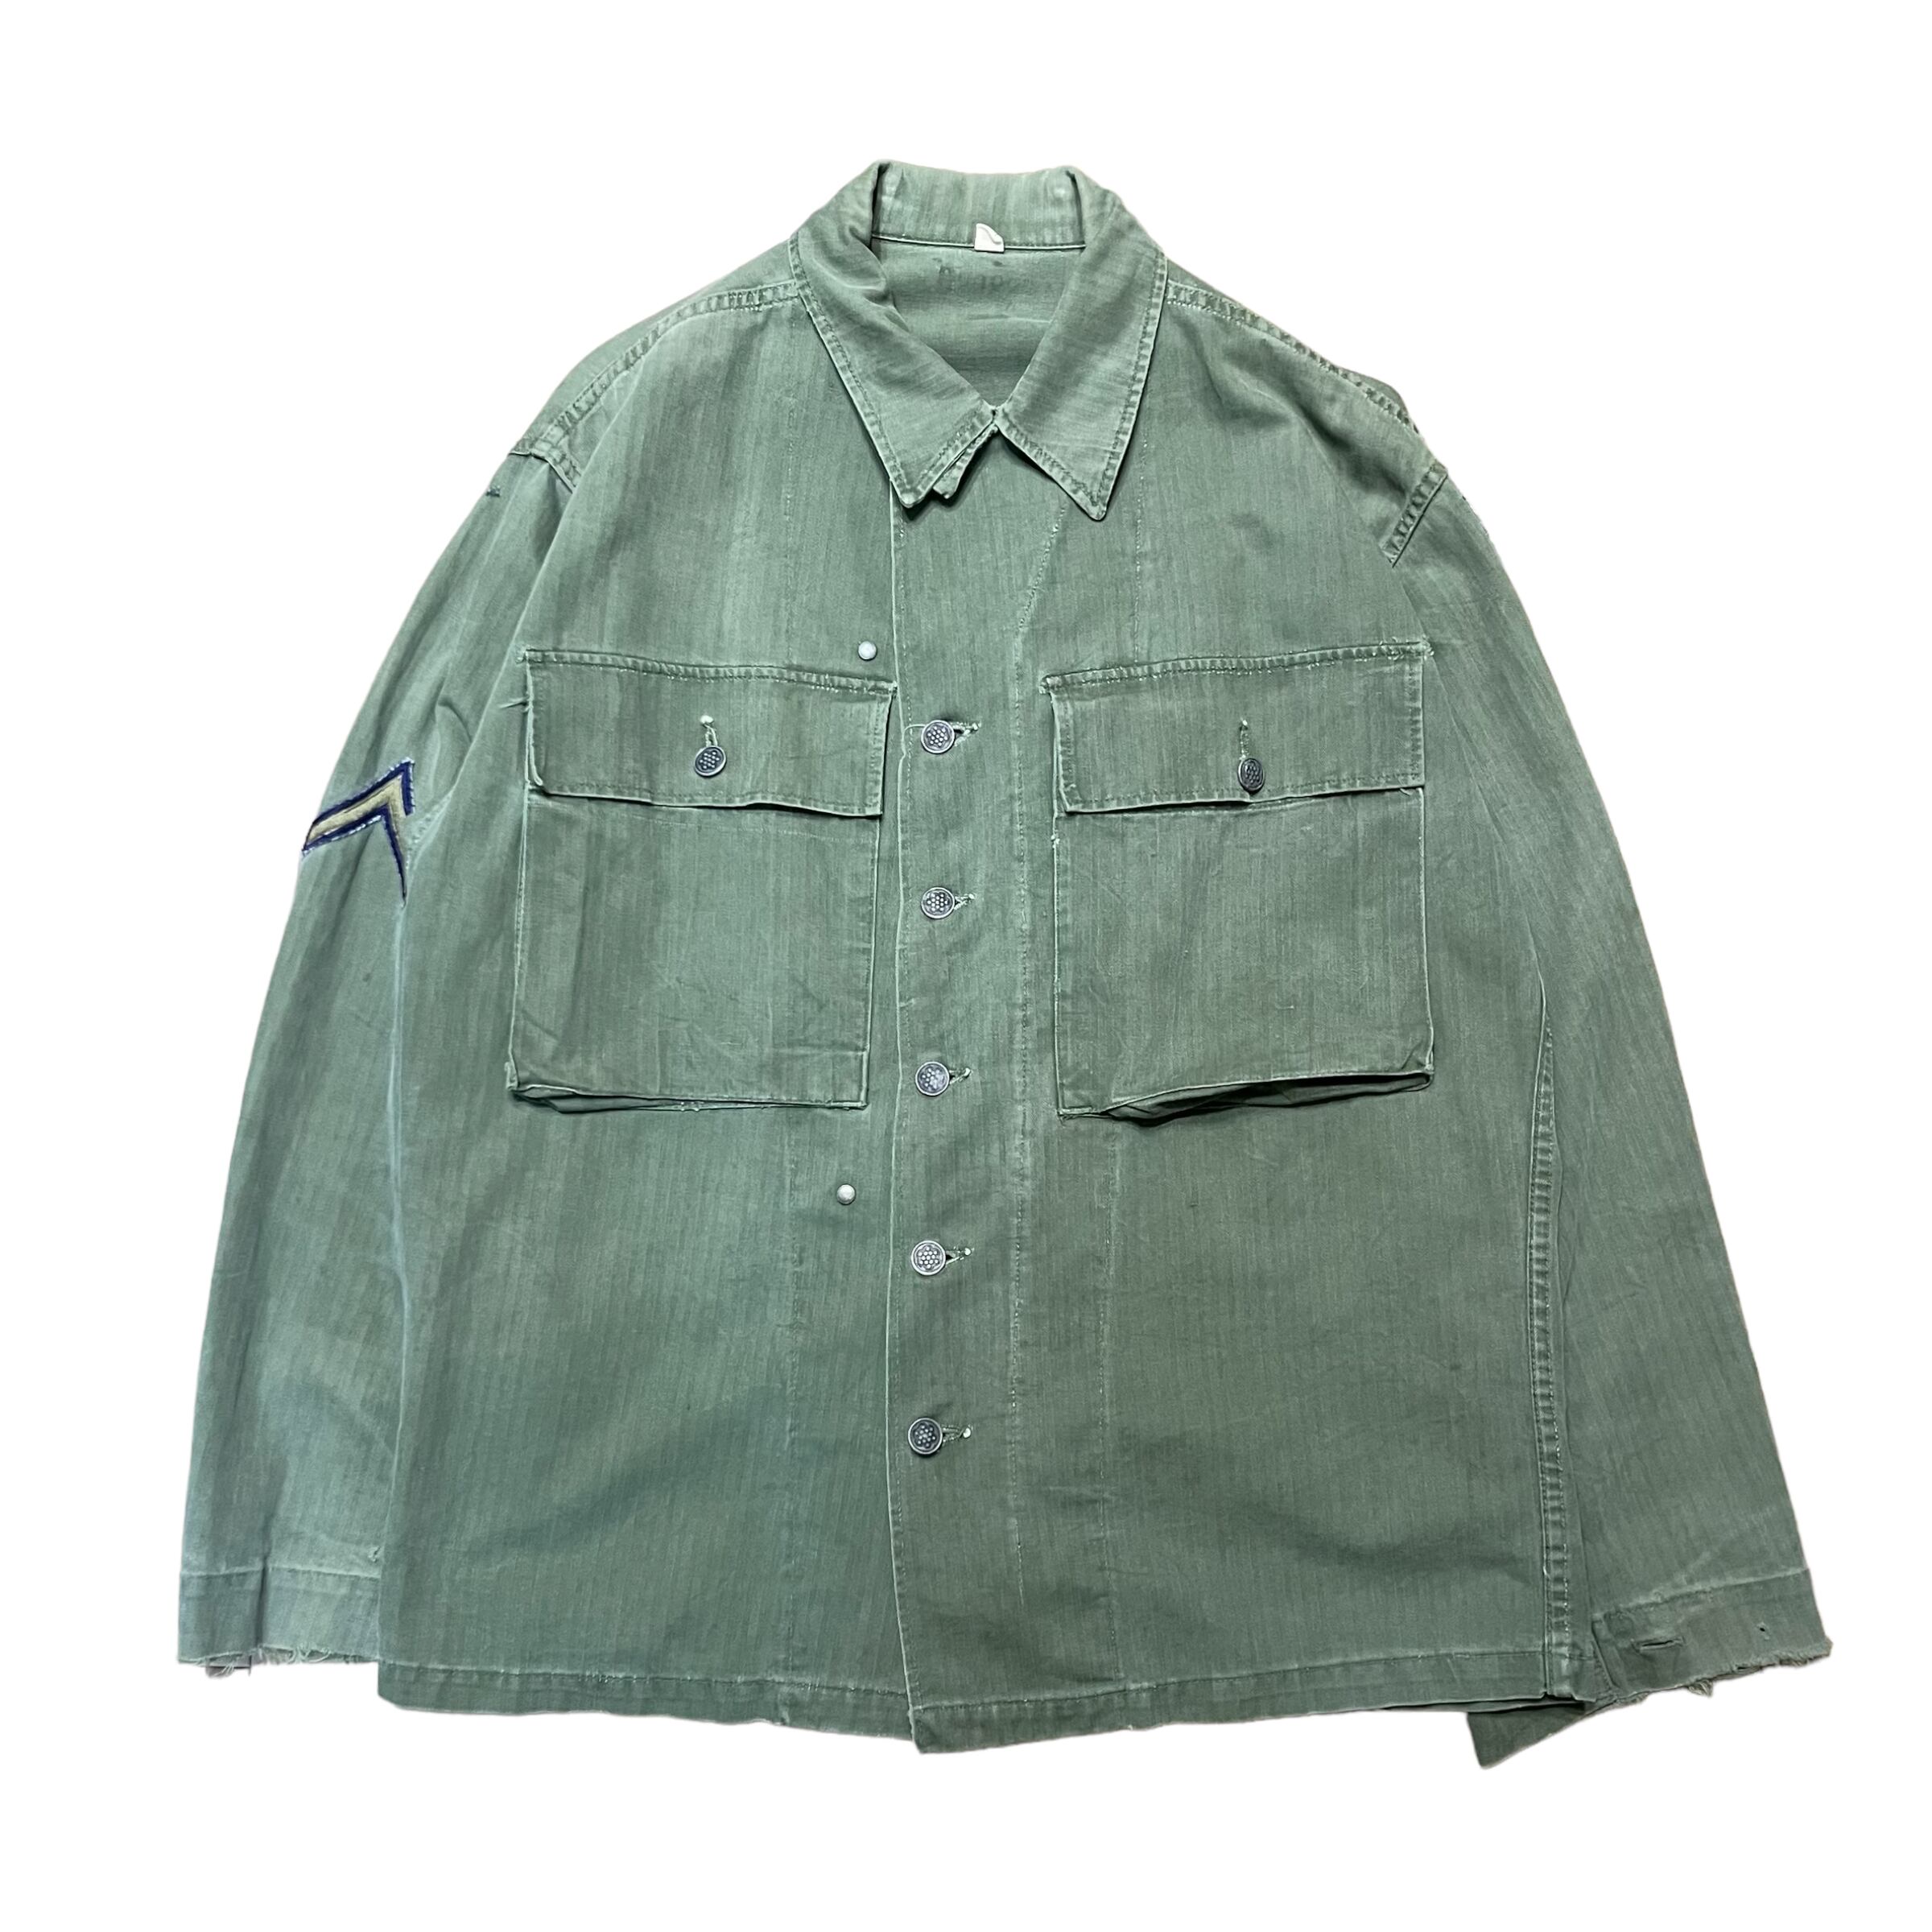 40's U.S.ARMY M-43 HBT jacket 13star button【36R】